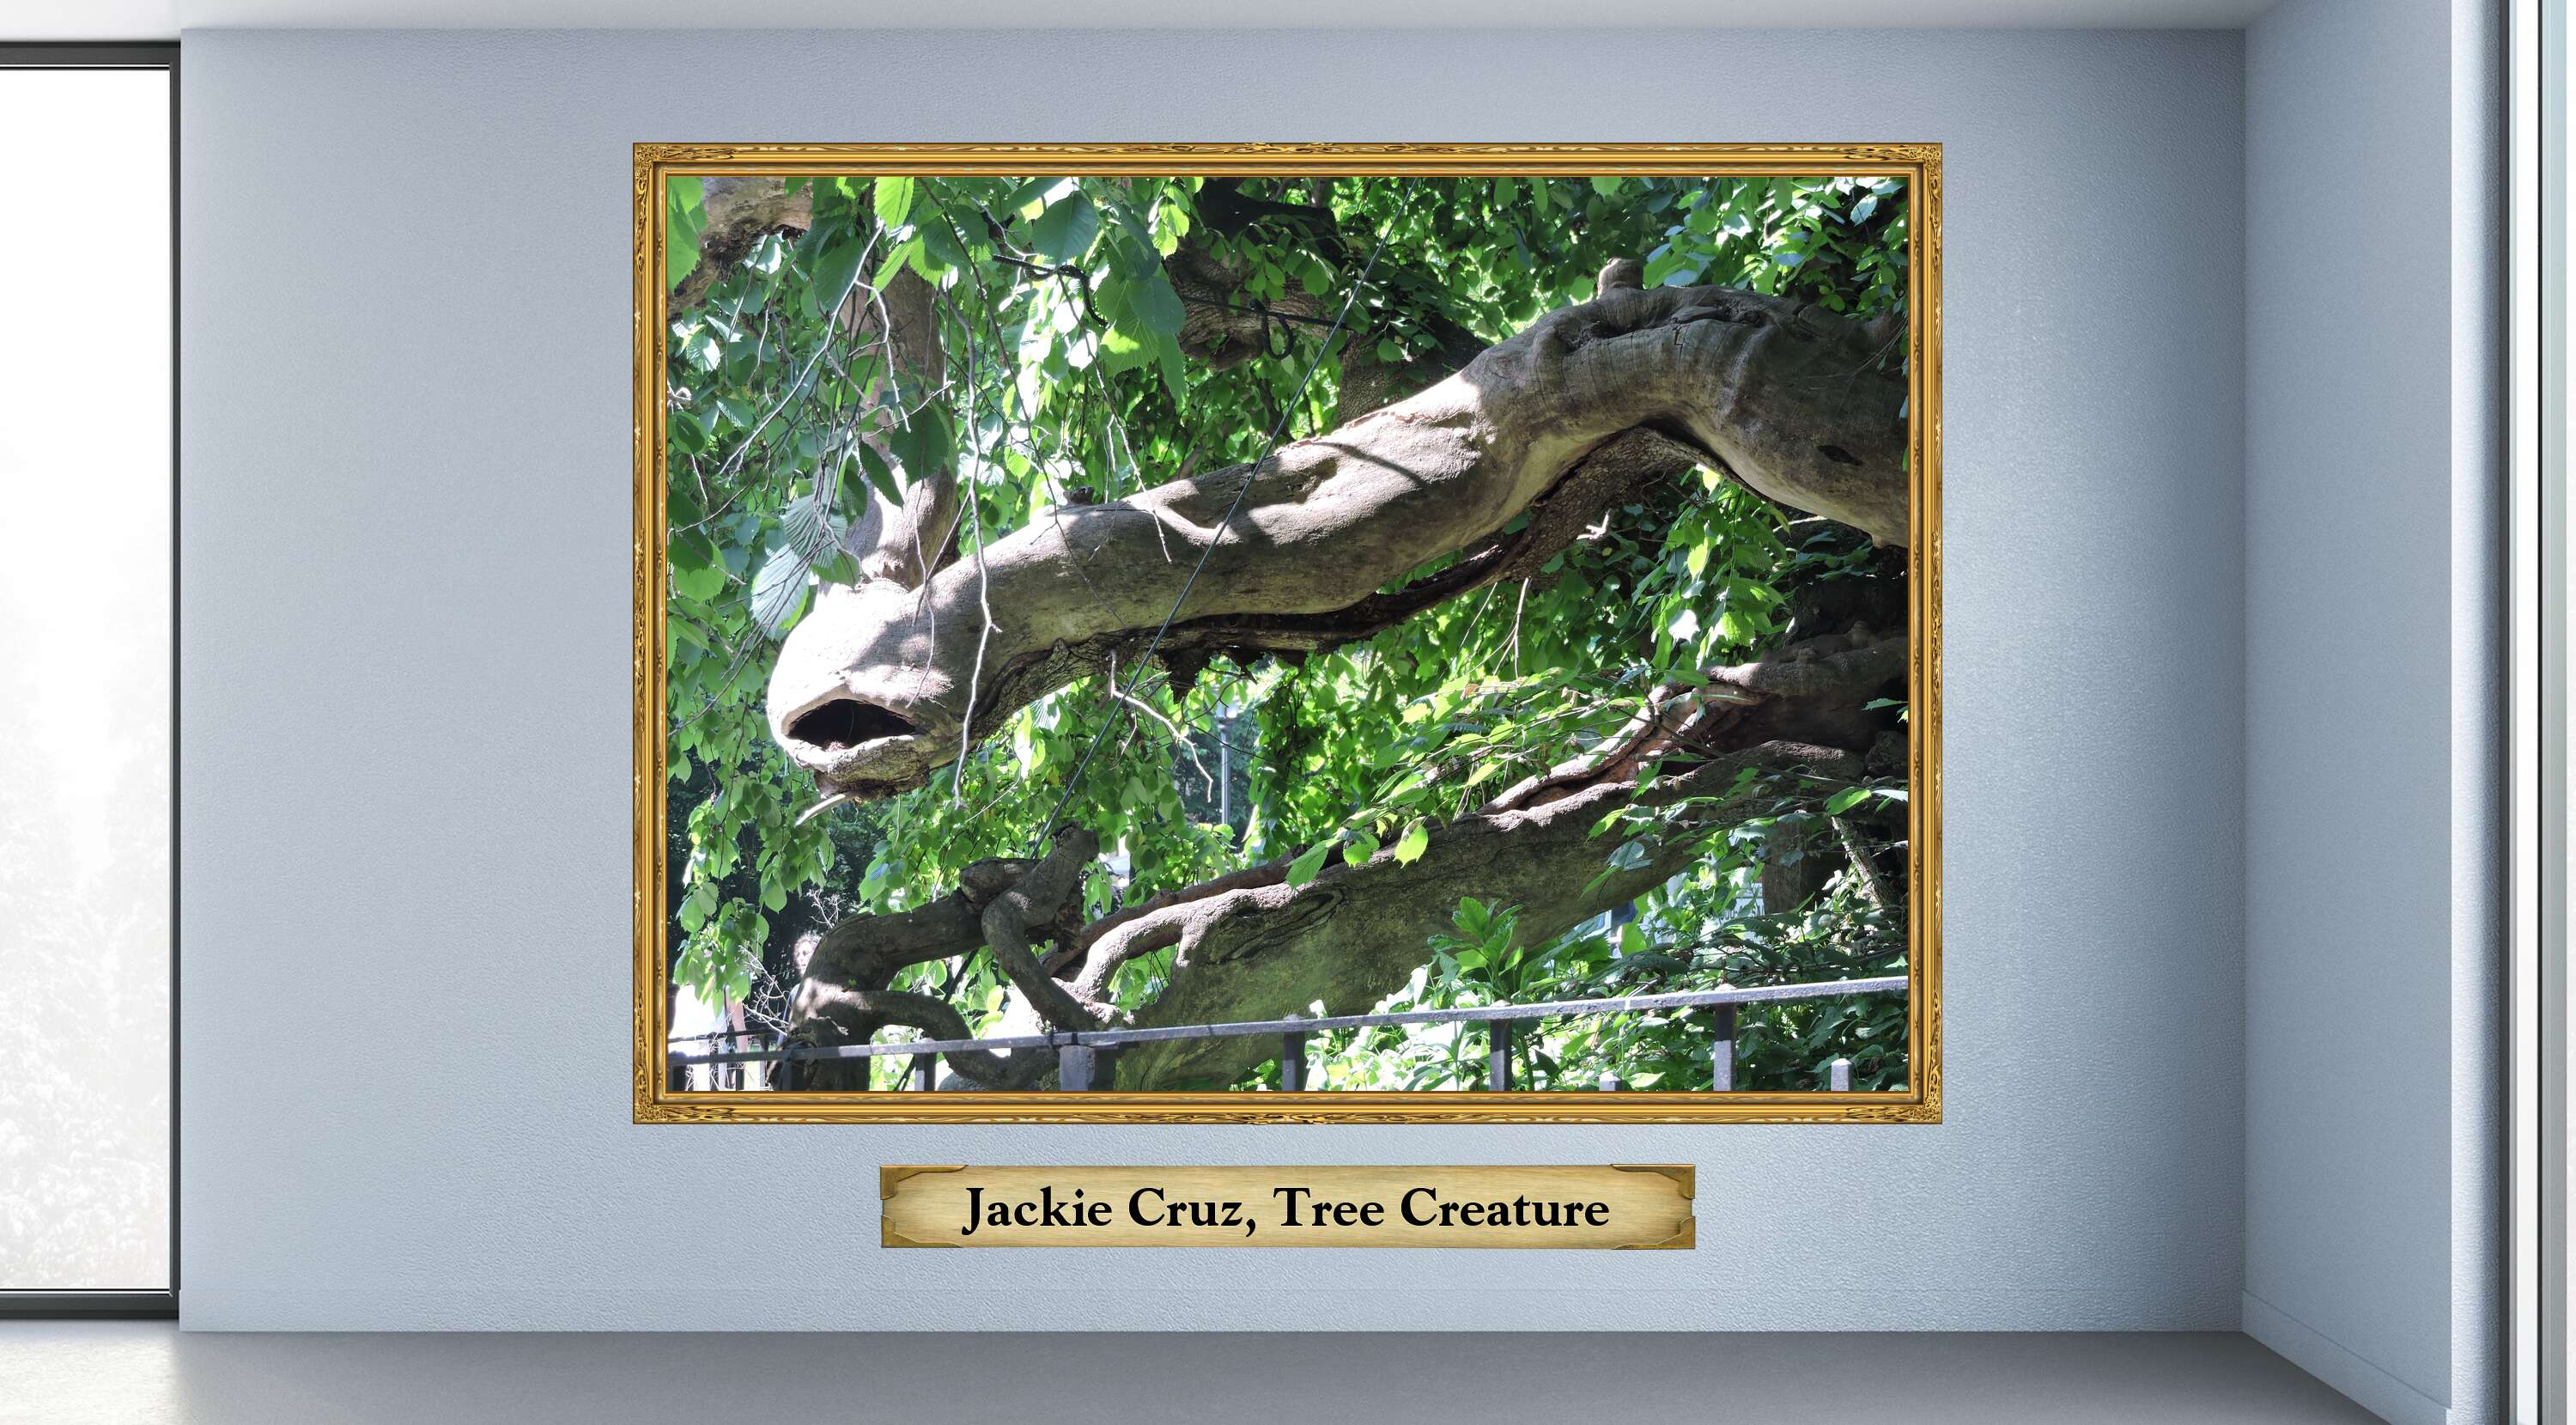 Jackie Cruz, Tree Creature